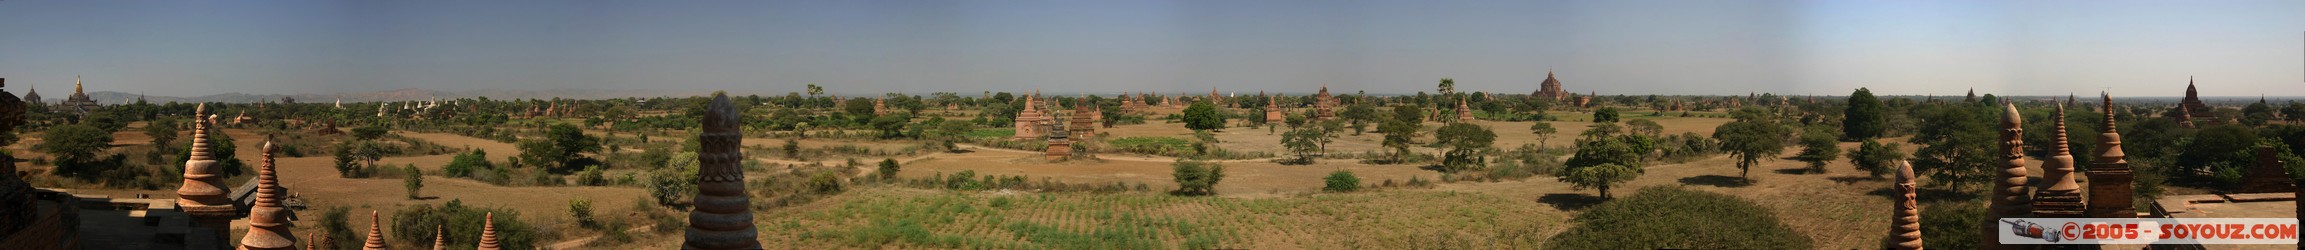 Bagan - Panoramic view from Ywa-Haung-Gyi Pagoda
Mots-clés: myanmar Burma Birmanie Ruines Pagode panorama